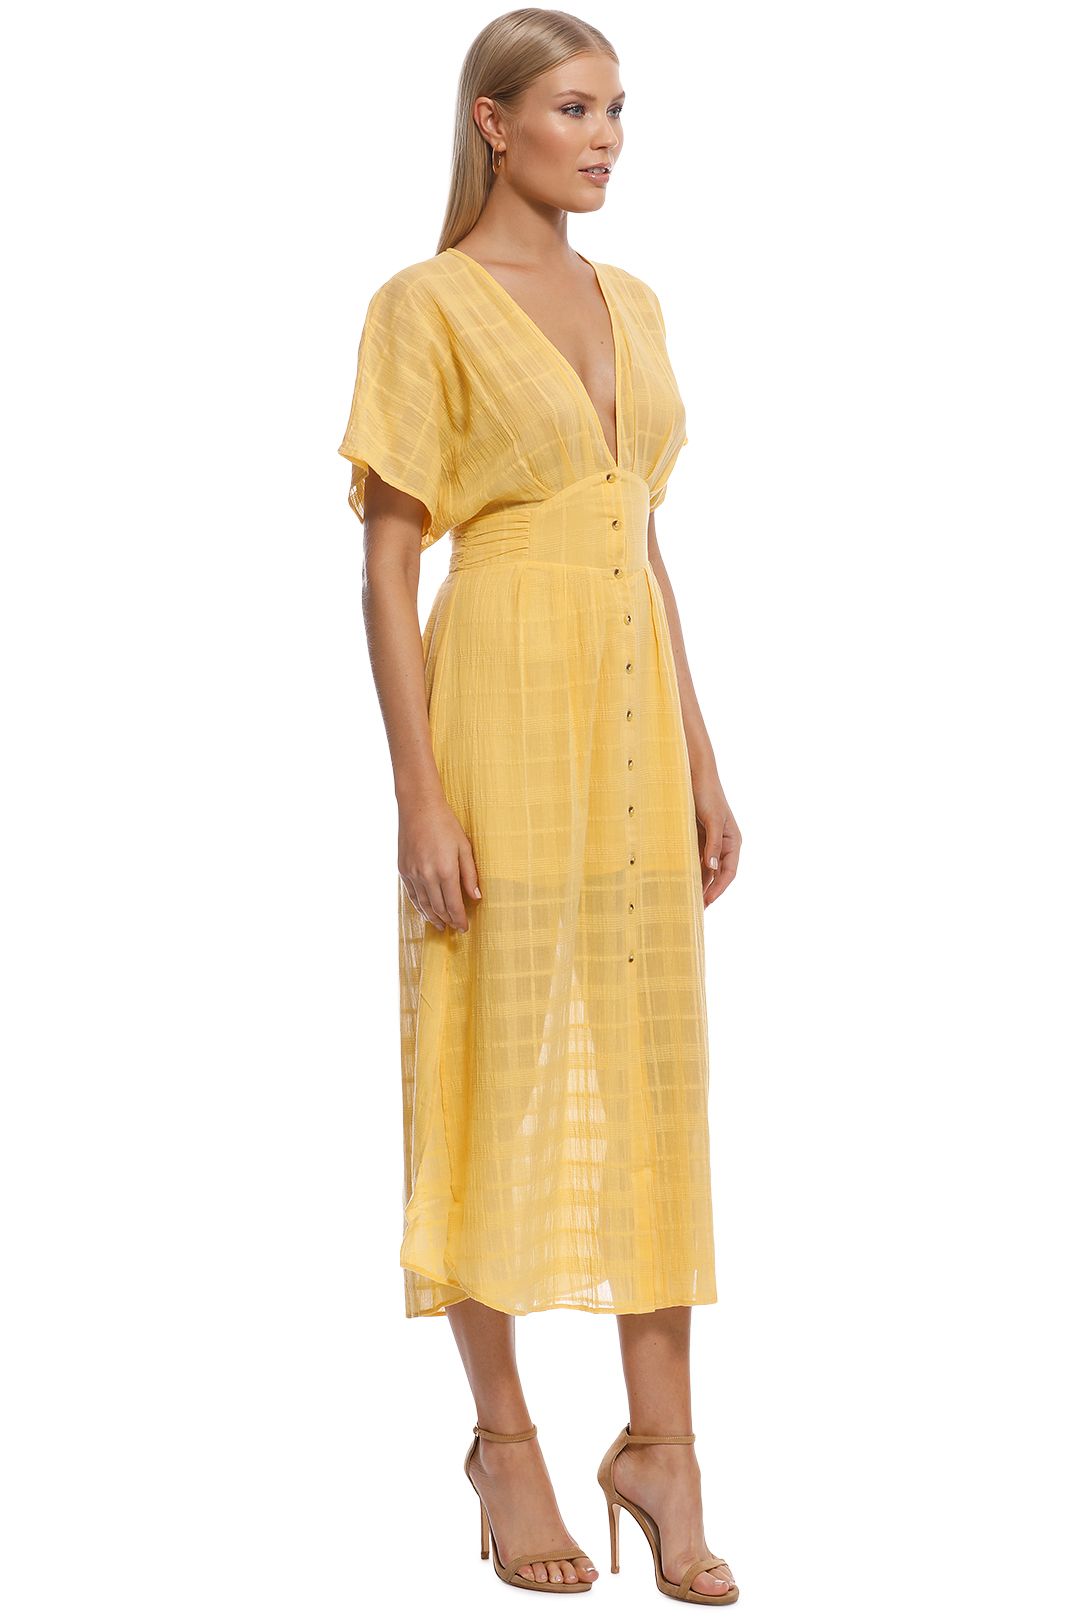 Suboo - Morning Light Ruffled Midi Dress - Yellow - Side